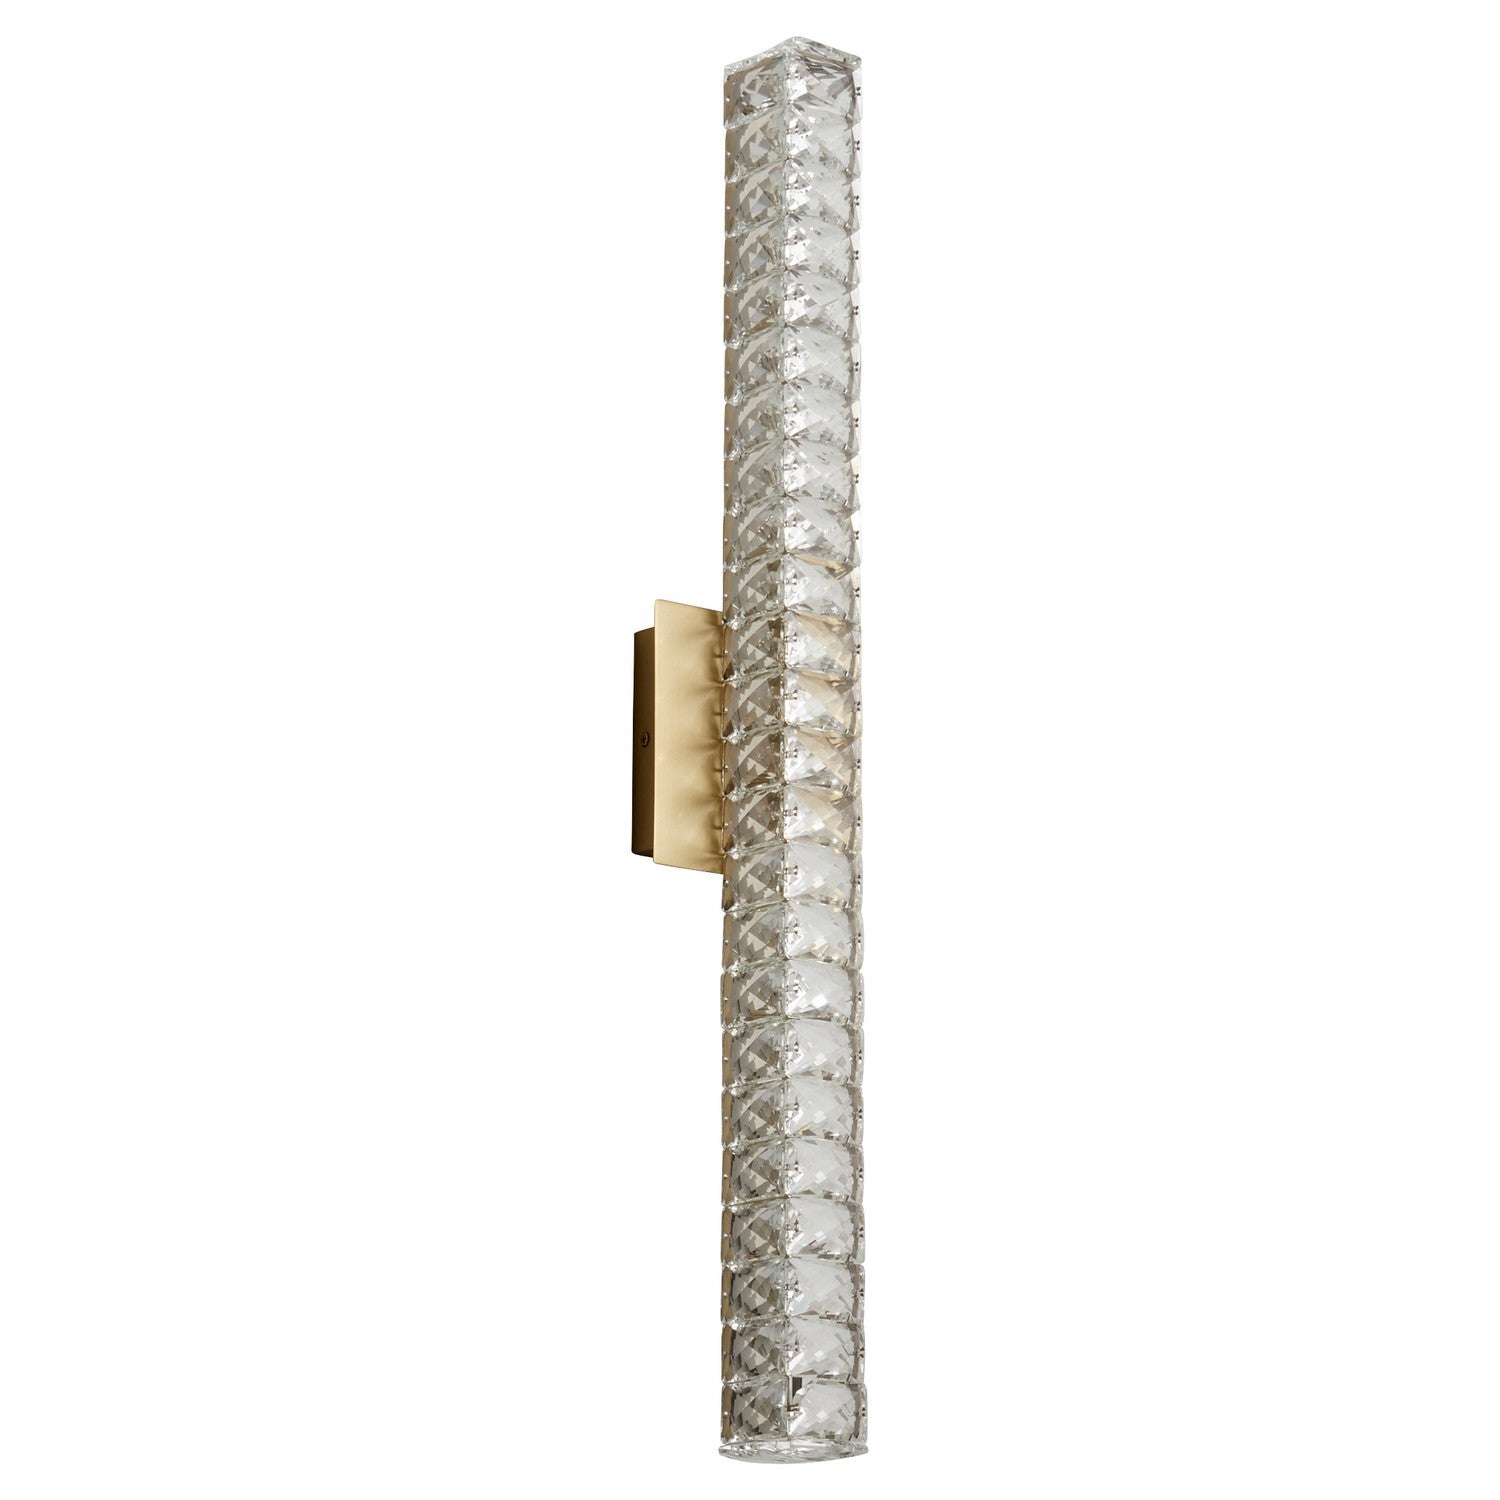 Oxygen Elan 3-574-40 Modern Vanity LED Wall Light Fixture - Aged Brass